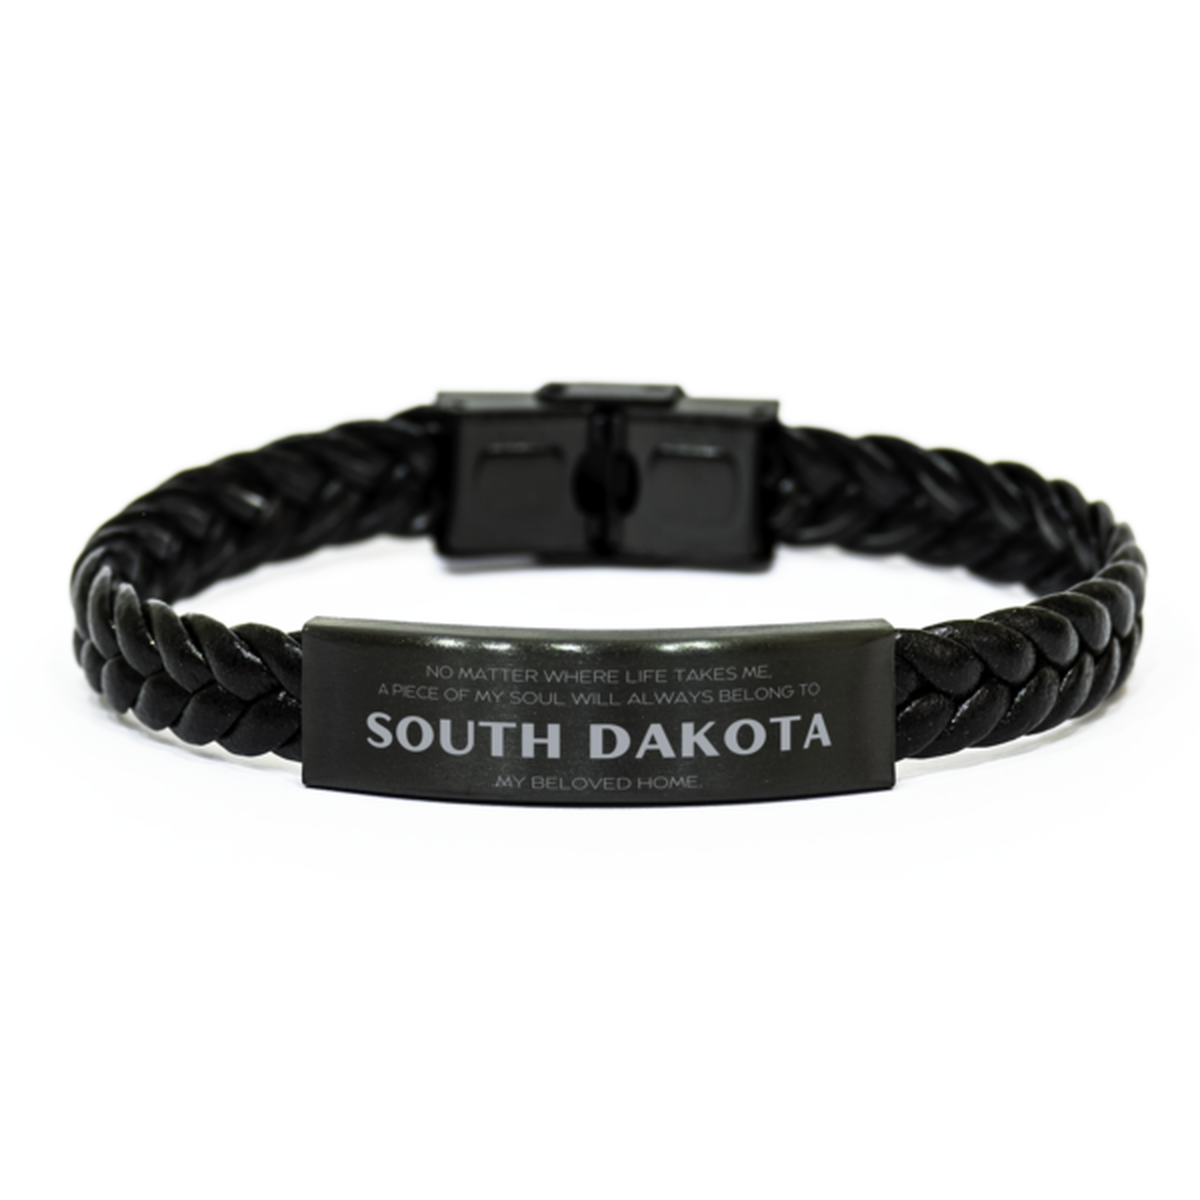 Love South Dakota State Gifts, My soul will always belong to South Dakota, Proud Braided Leather Bracelet, Birthday Unique Gifts For South Dakota Men, Women, Friends